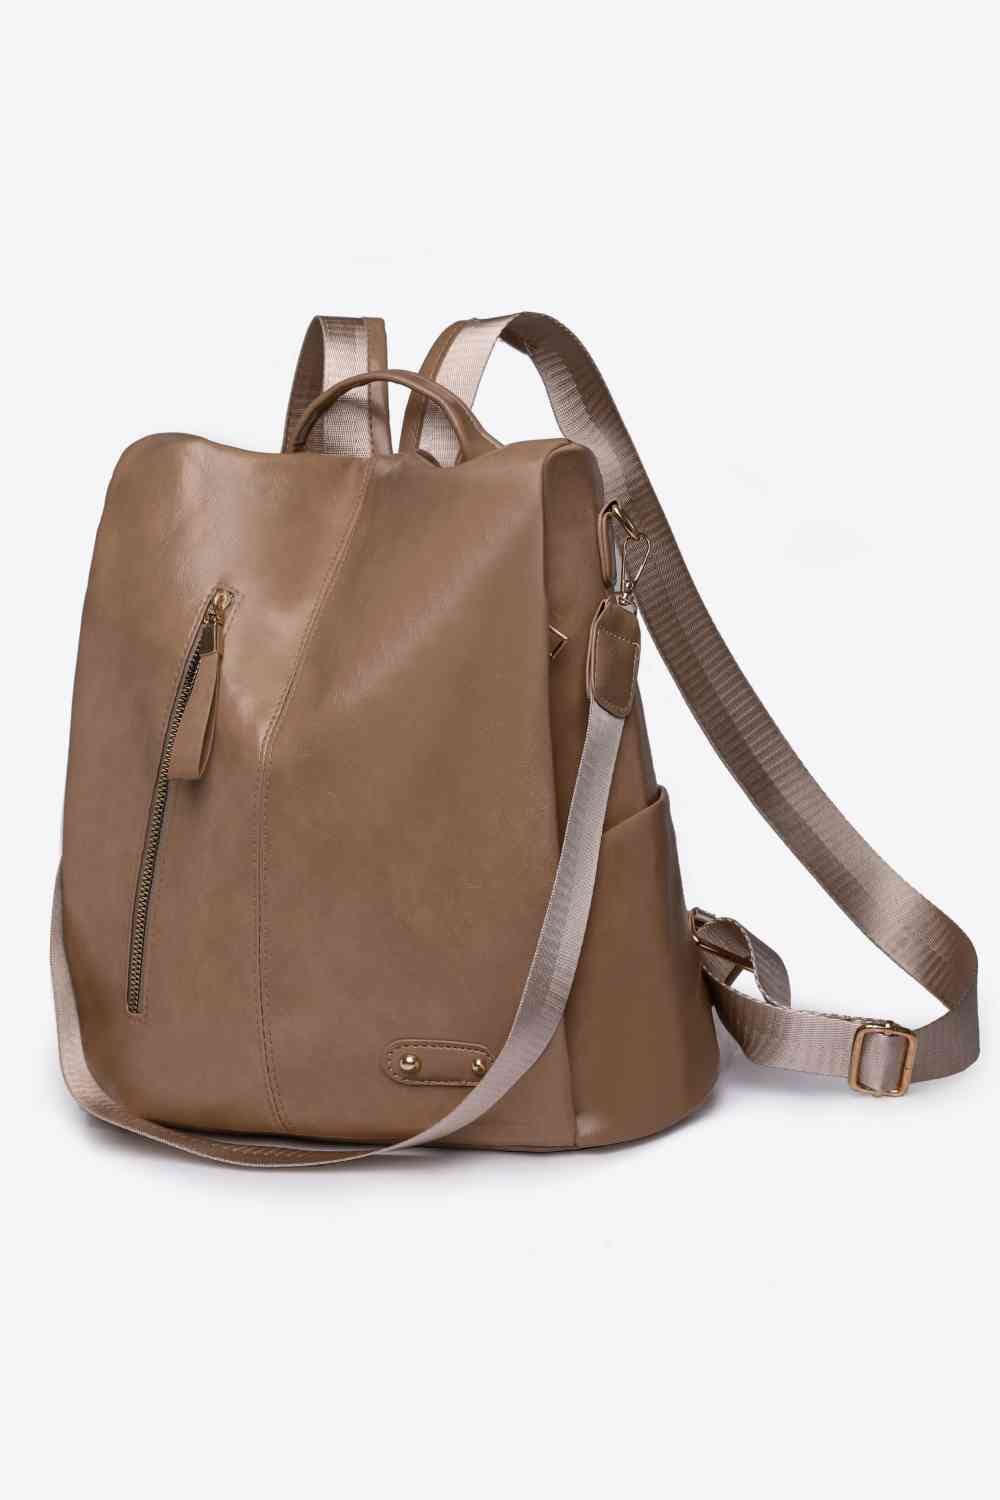 Zipper Pocket Backpack - Sydney So Sweet